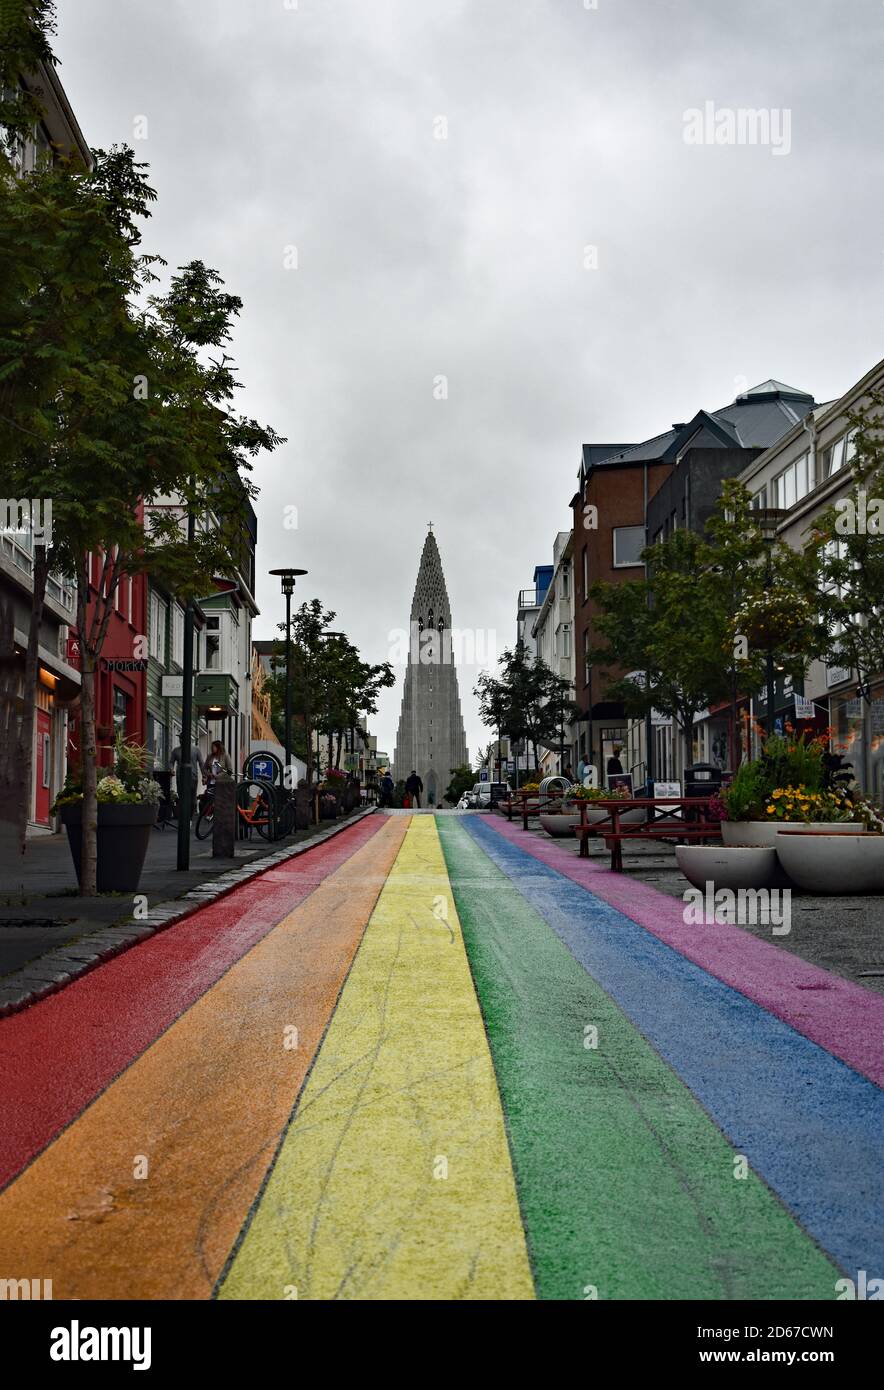 A rainbow painted road (Skolavordustigur) leads to Hallgrimskirkja Church in Reykjavik, Iceland. Trees and plants line the shop filled street. Stock Photo